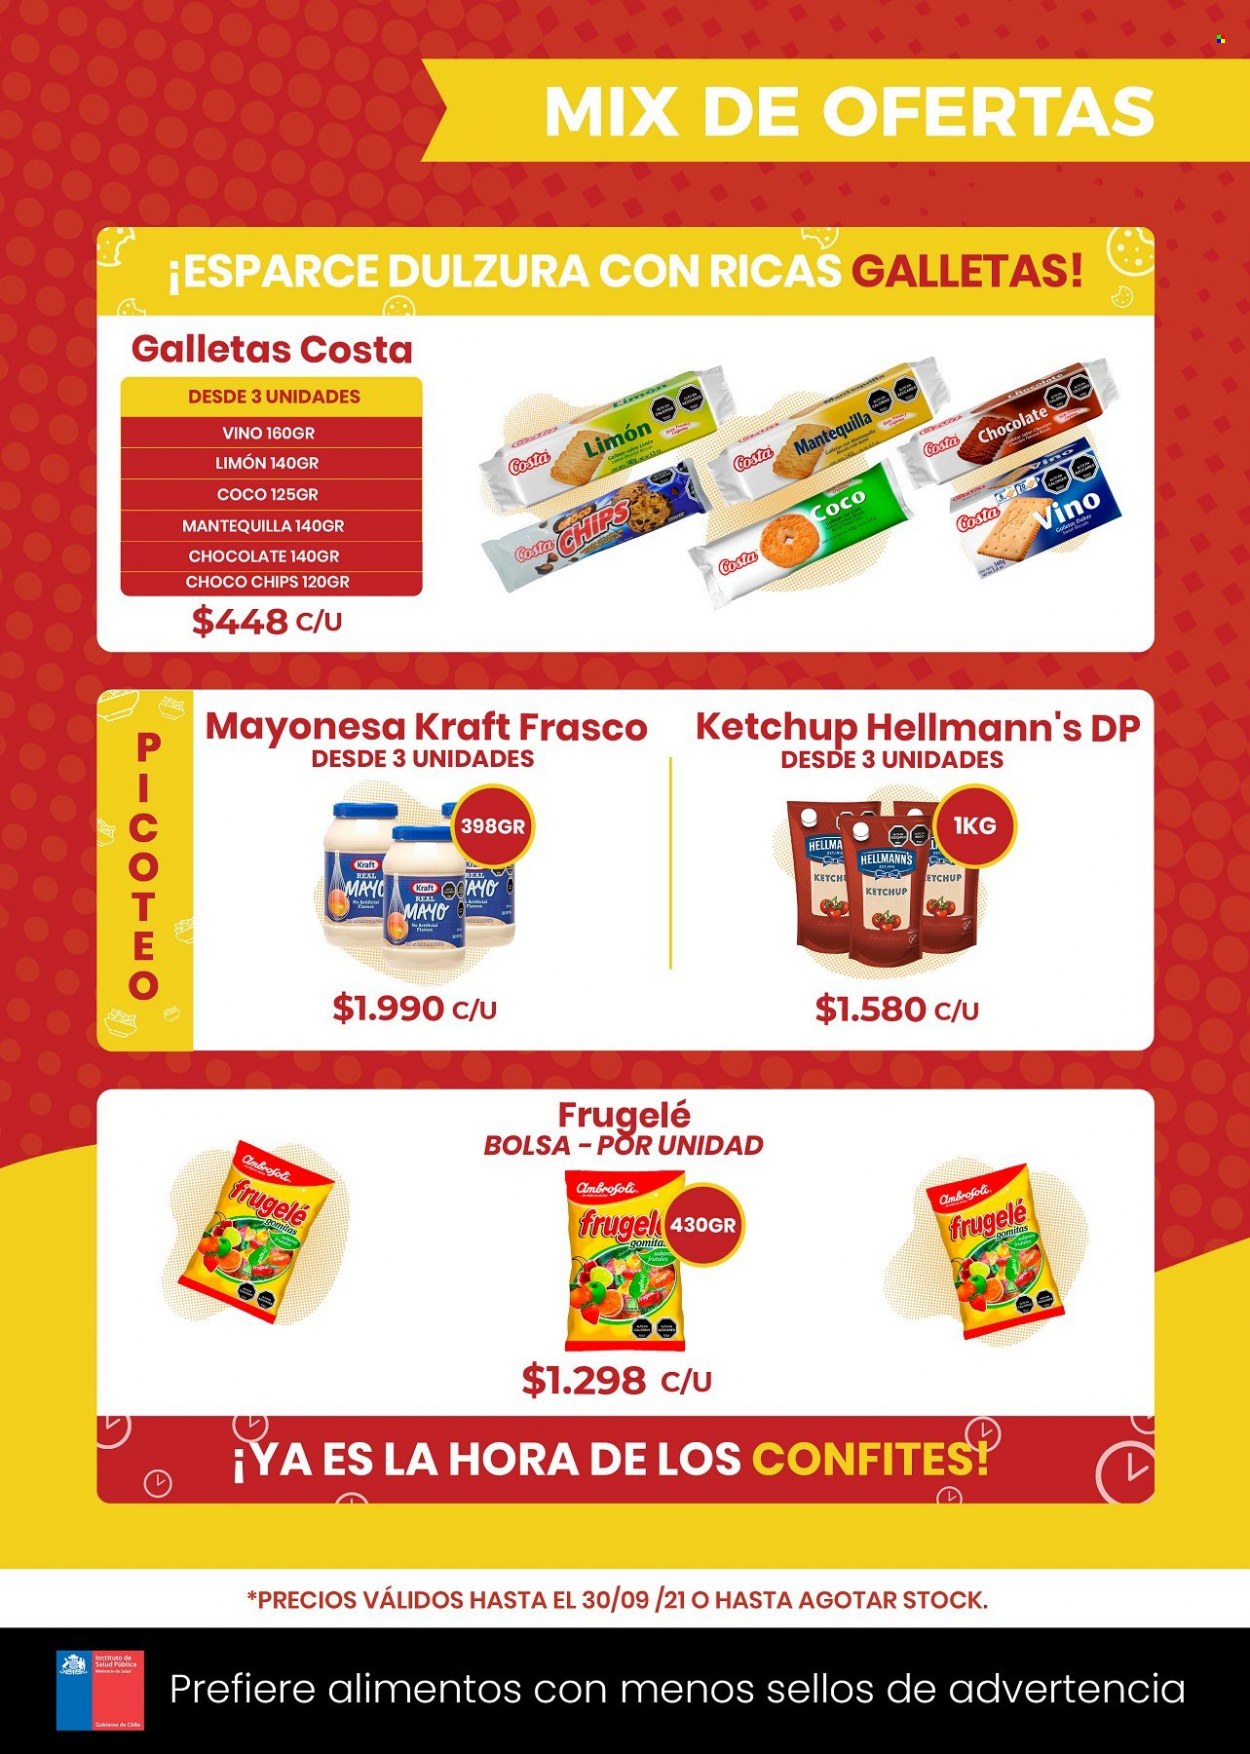 thumbnail - Catálogo Comercial Castro - 23.09.2021 - 06.10.2021 - Ventas - mayonesa, Hellmann's, galletas, Choco Chips, chips, ketchup, vino, bolso. Página 12.